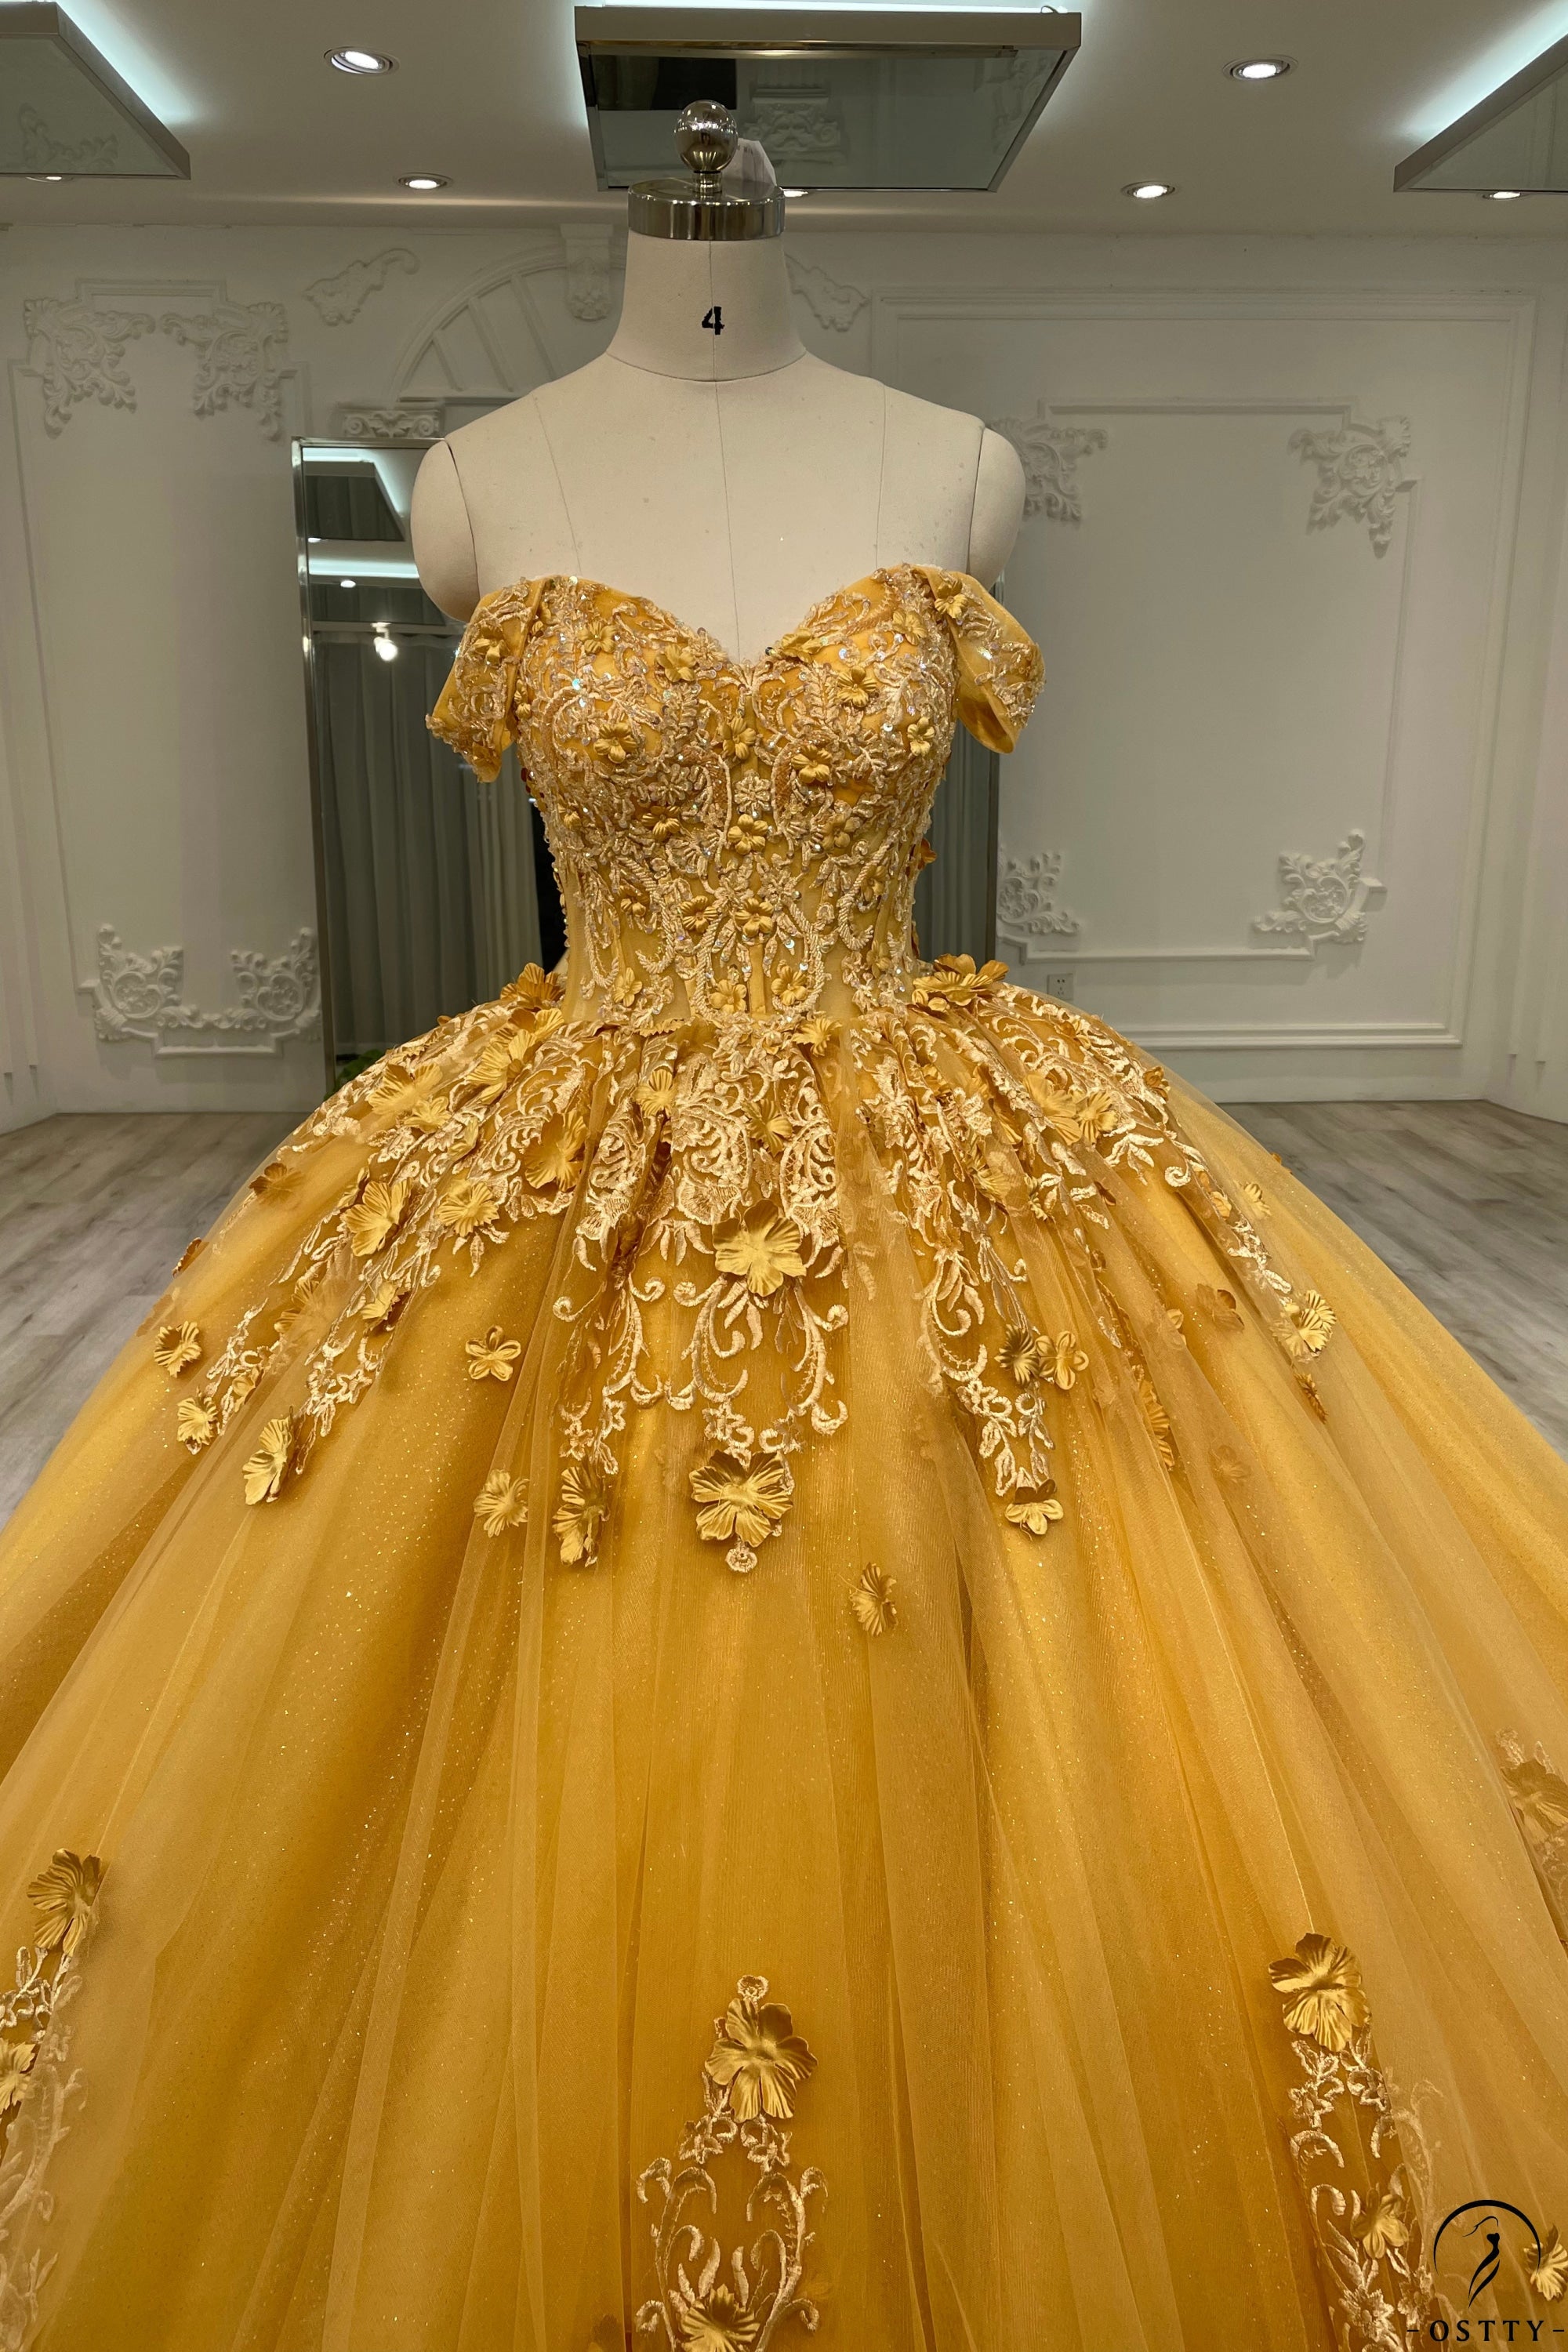 OSTTY - Gold Cape Quinceanera Dress OS746 $849.99